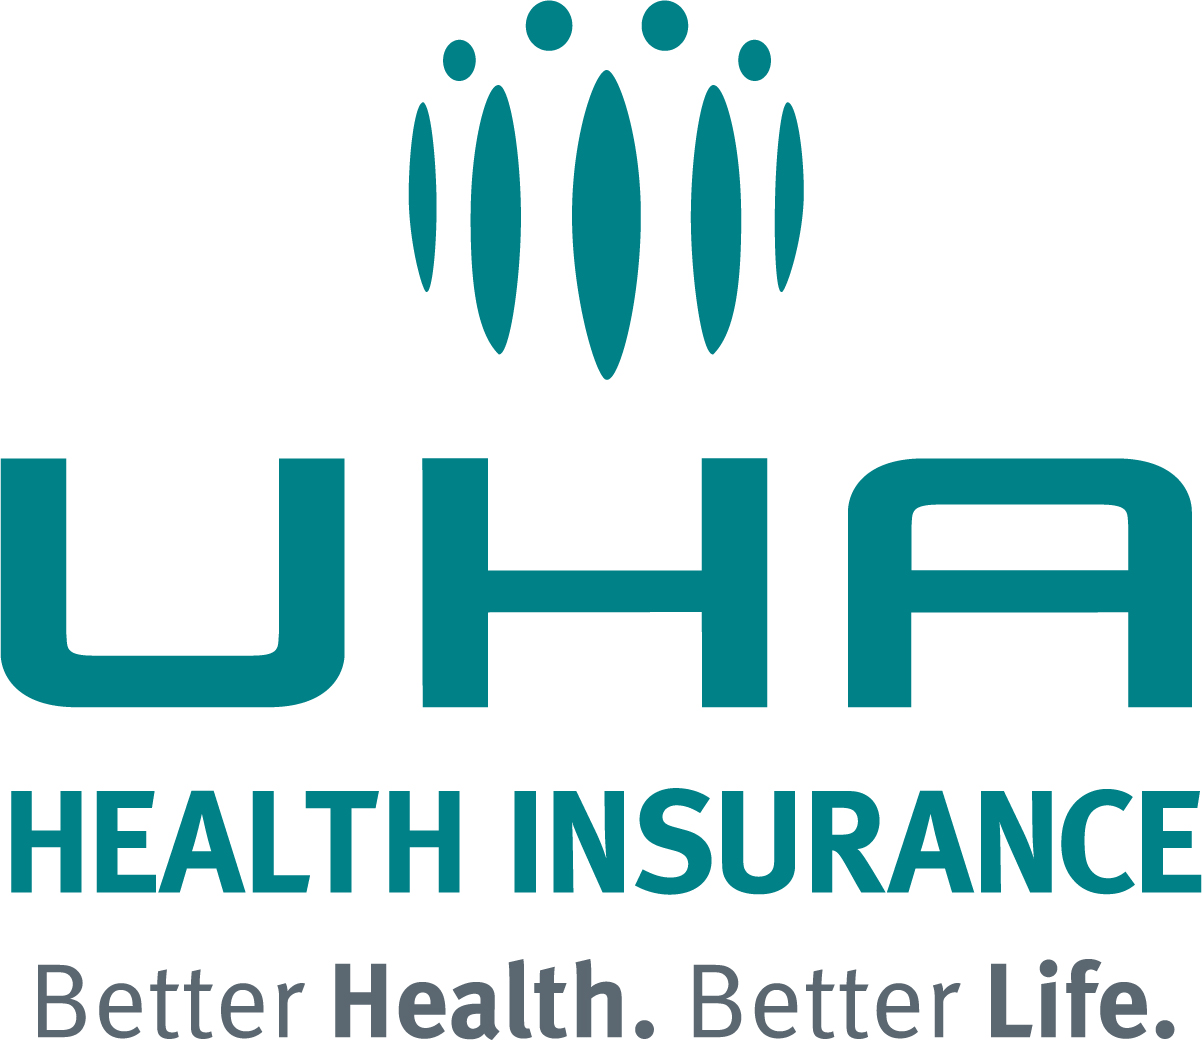 UHA Health Insurance